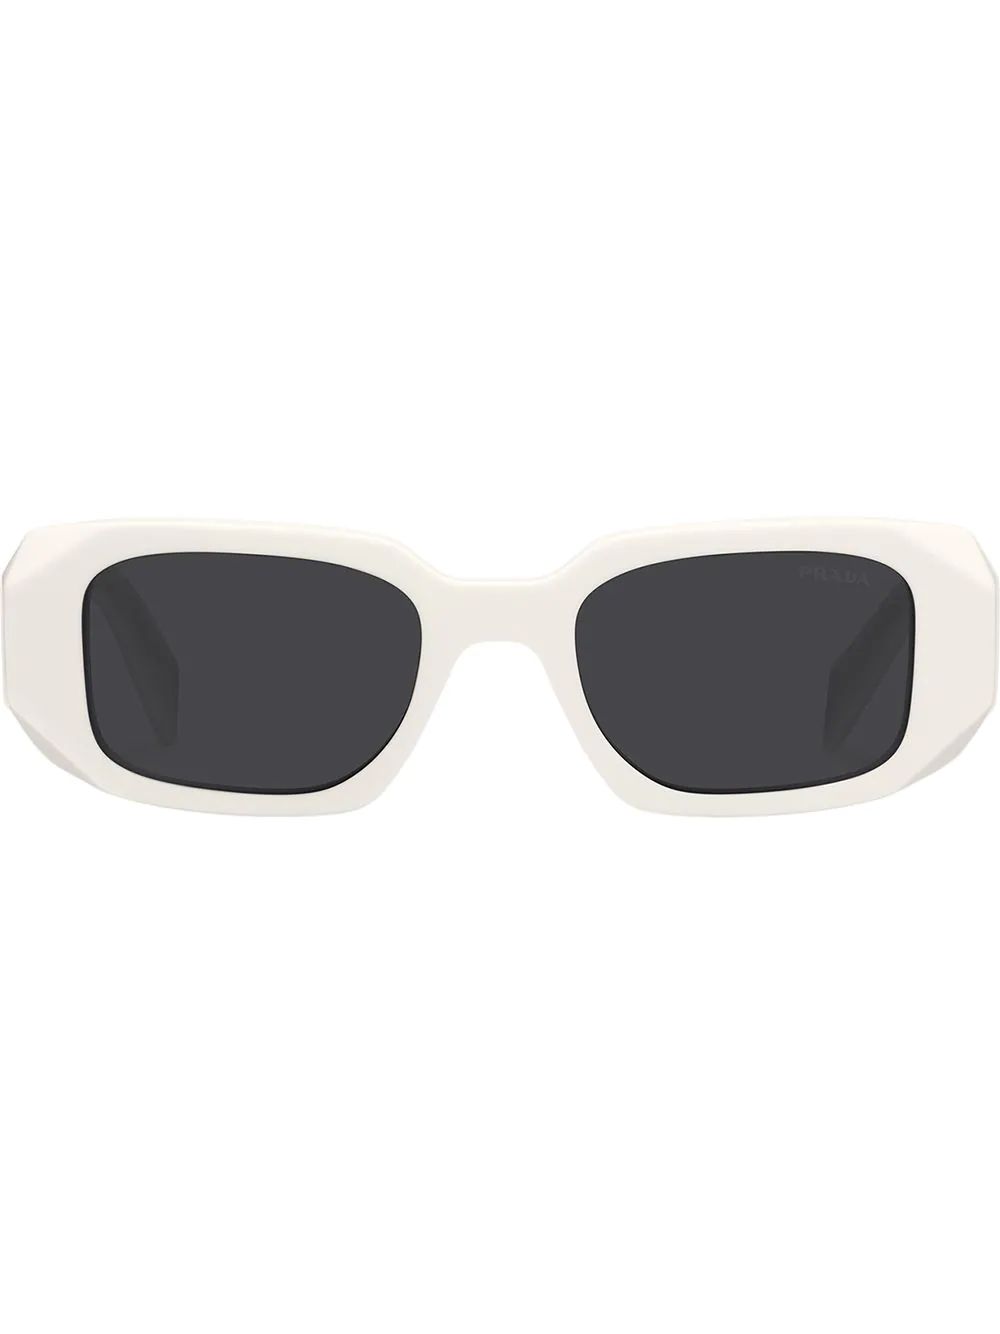 Prada Runway sunglasses | Farfetch Global